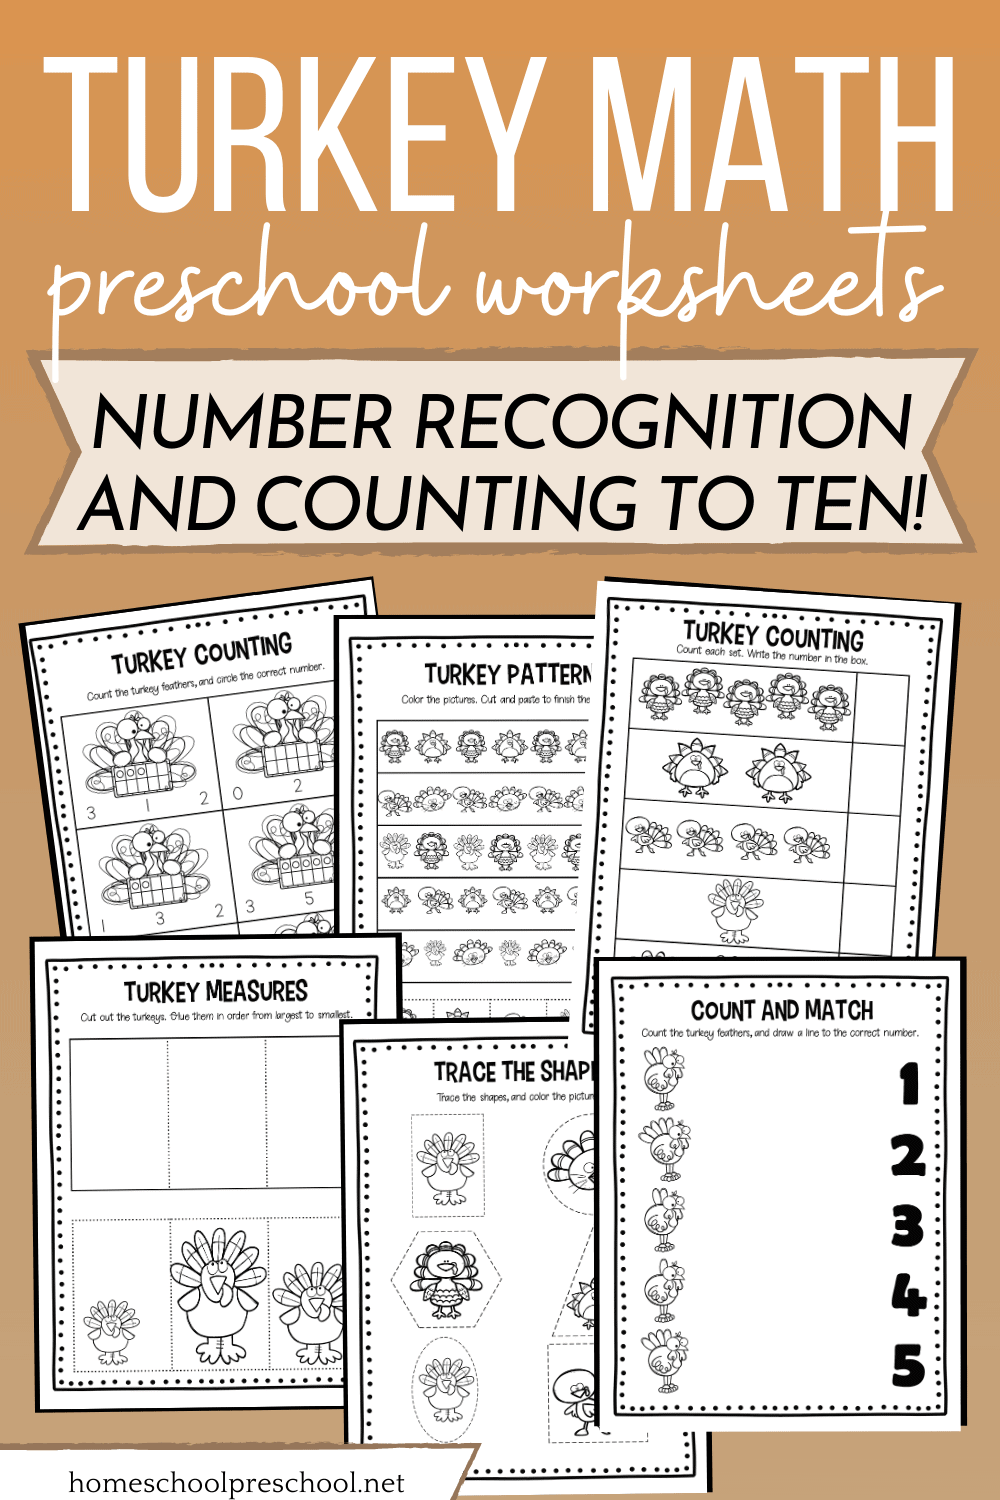 printable-turkey-math-worksheets-for-preschoolers